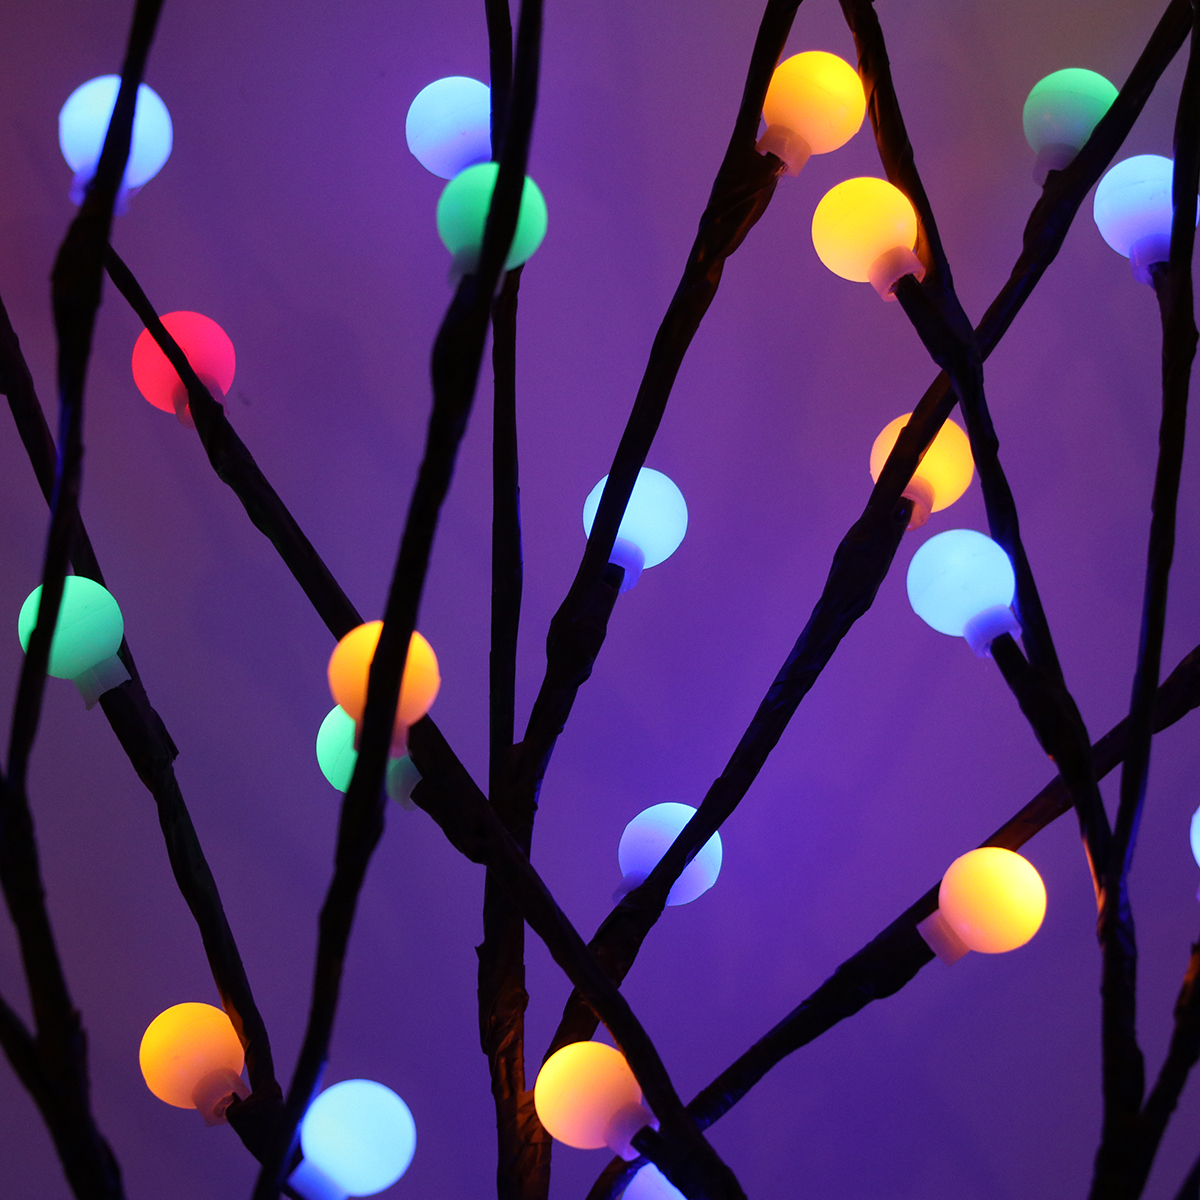 3pcs-Solar-Garden-Light-Outdoor-Decor-Tree-Ball-Lawn-Yard-Path-Lamp-Christmas-Decorations-Lights-1744199-7